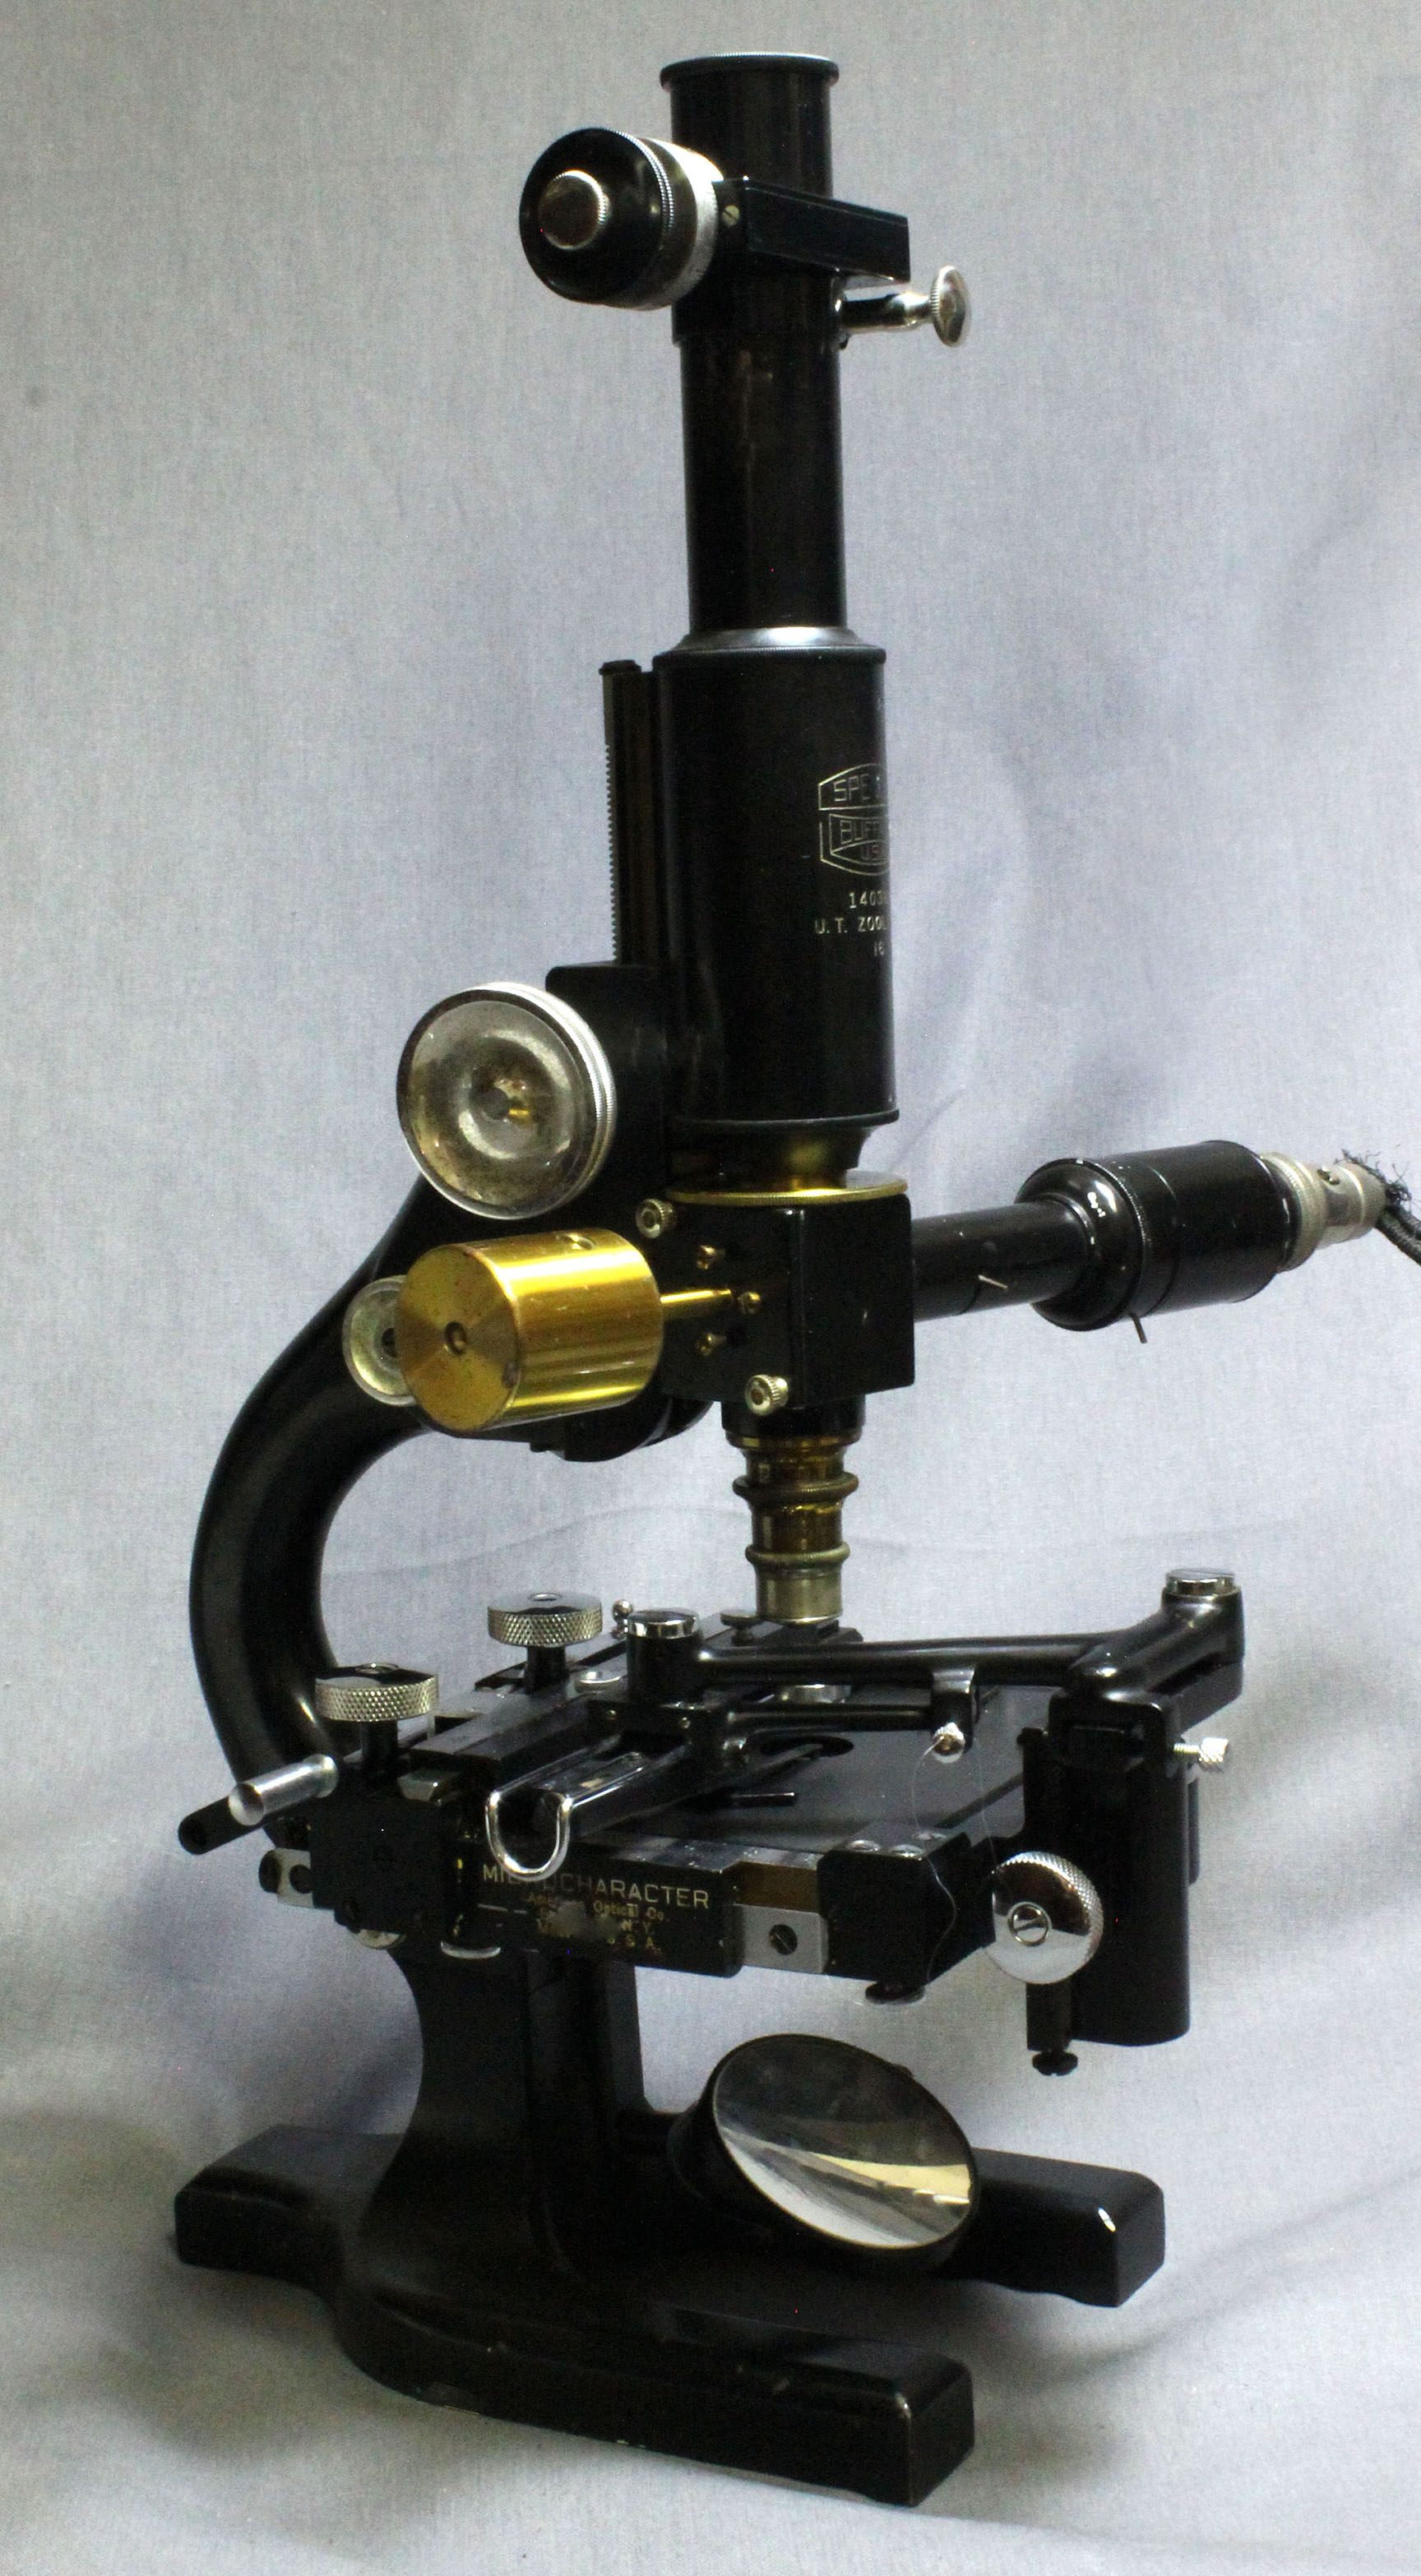 setup on microscope